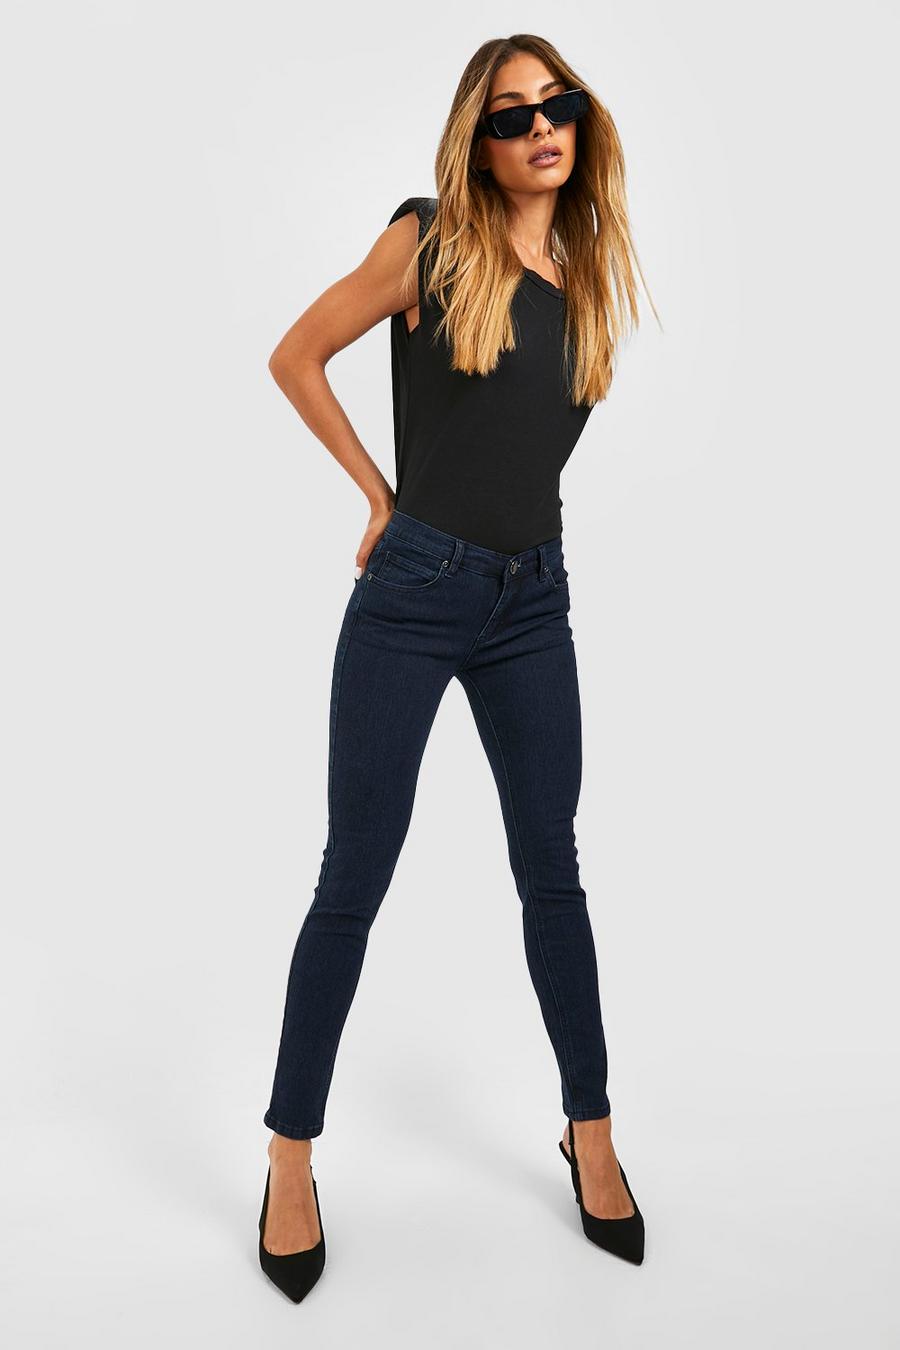 Sexy Women Plus Size Black Super Low Rise Waist Jeans Fold Flare